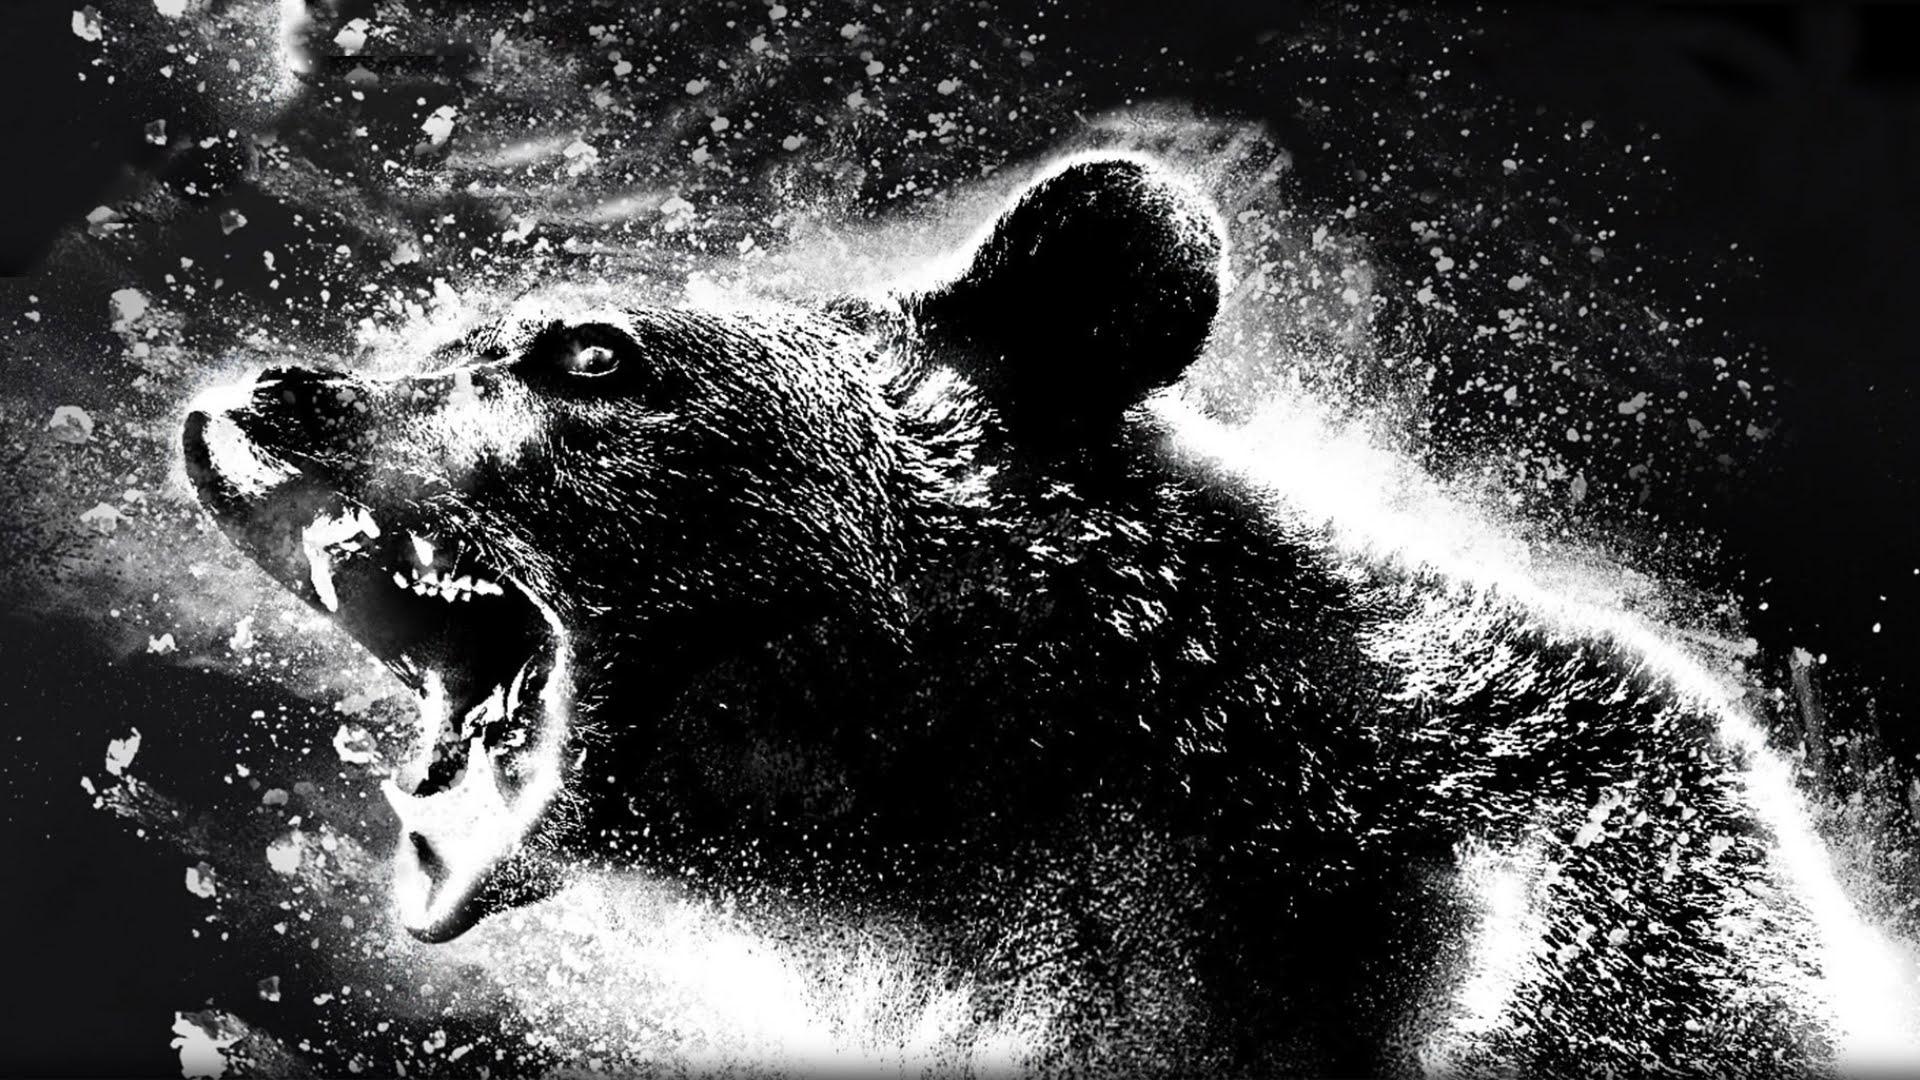 O Urso do Pó Branco - Trailer 1 Oficial (Universal Pictures) HD